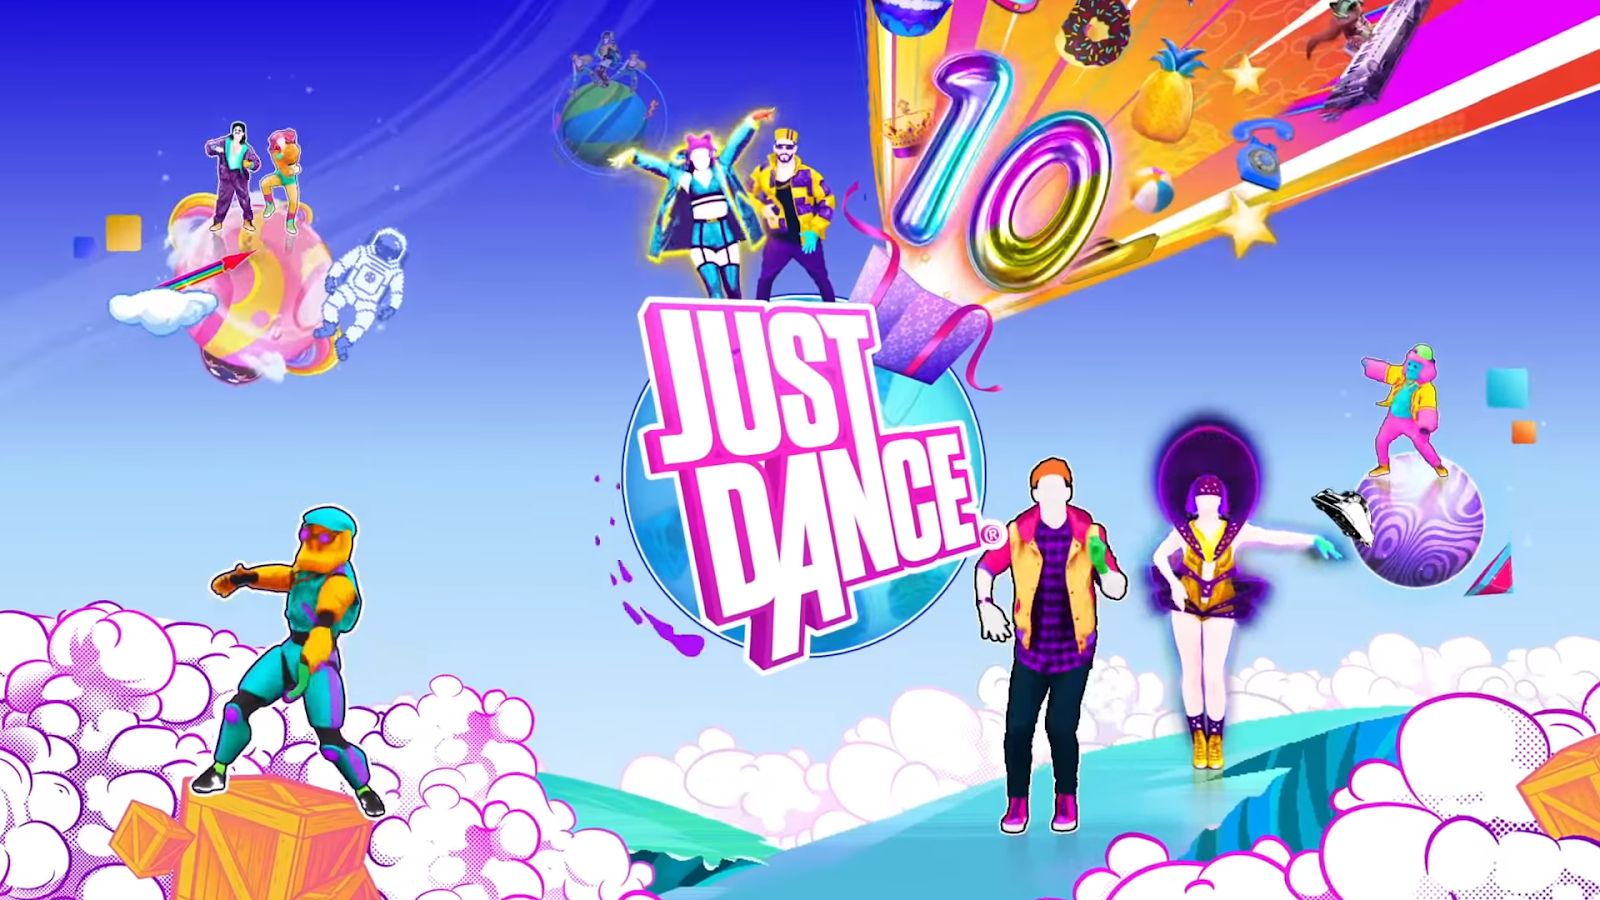 LISTA COMPLETA DE MÚSICAS - Just Dance 2020 